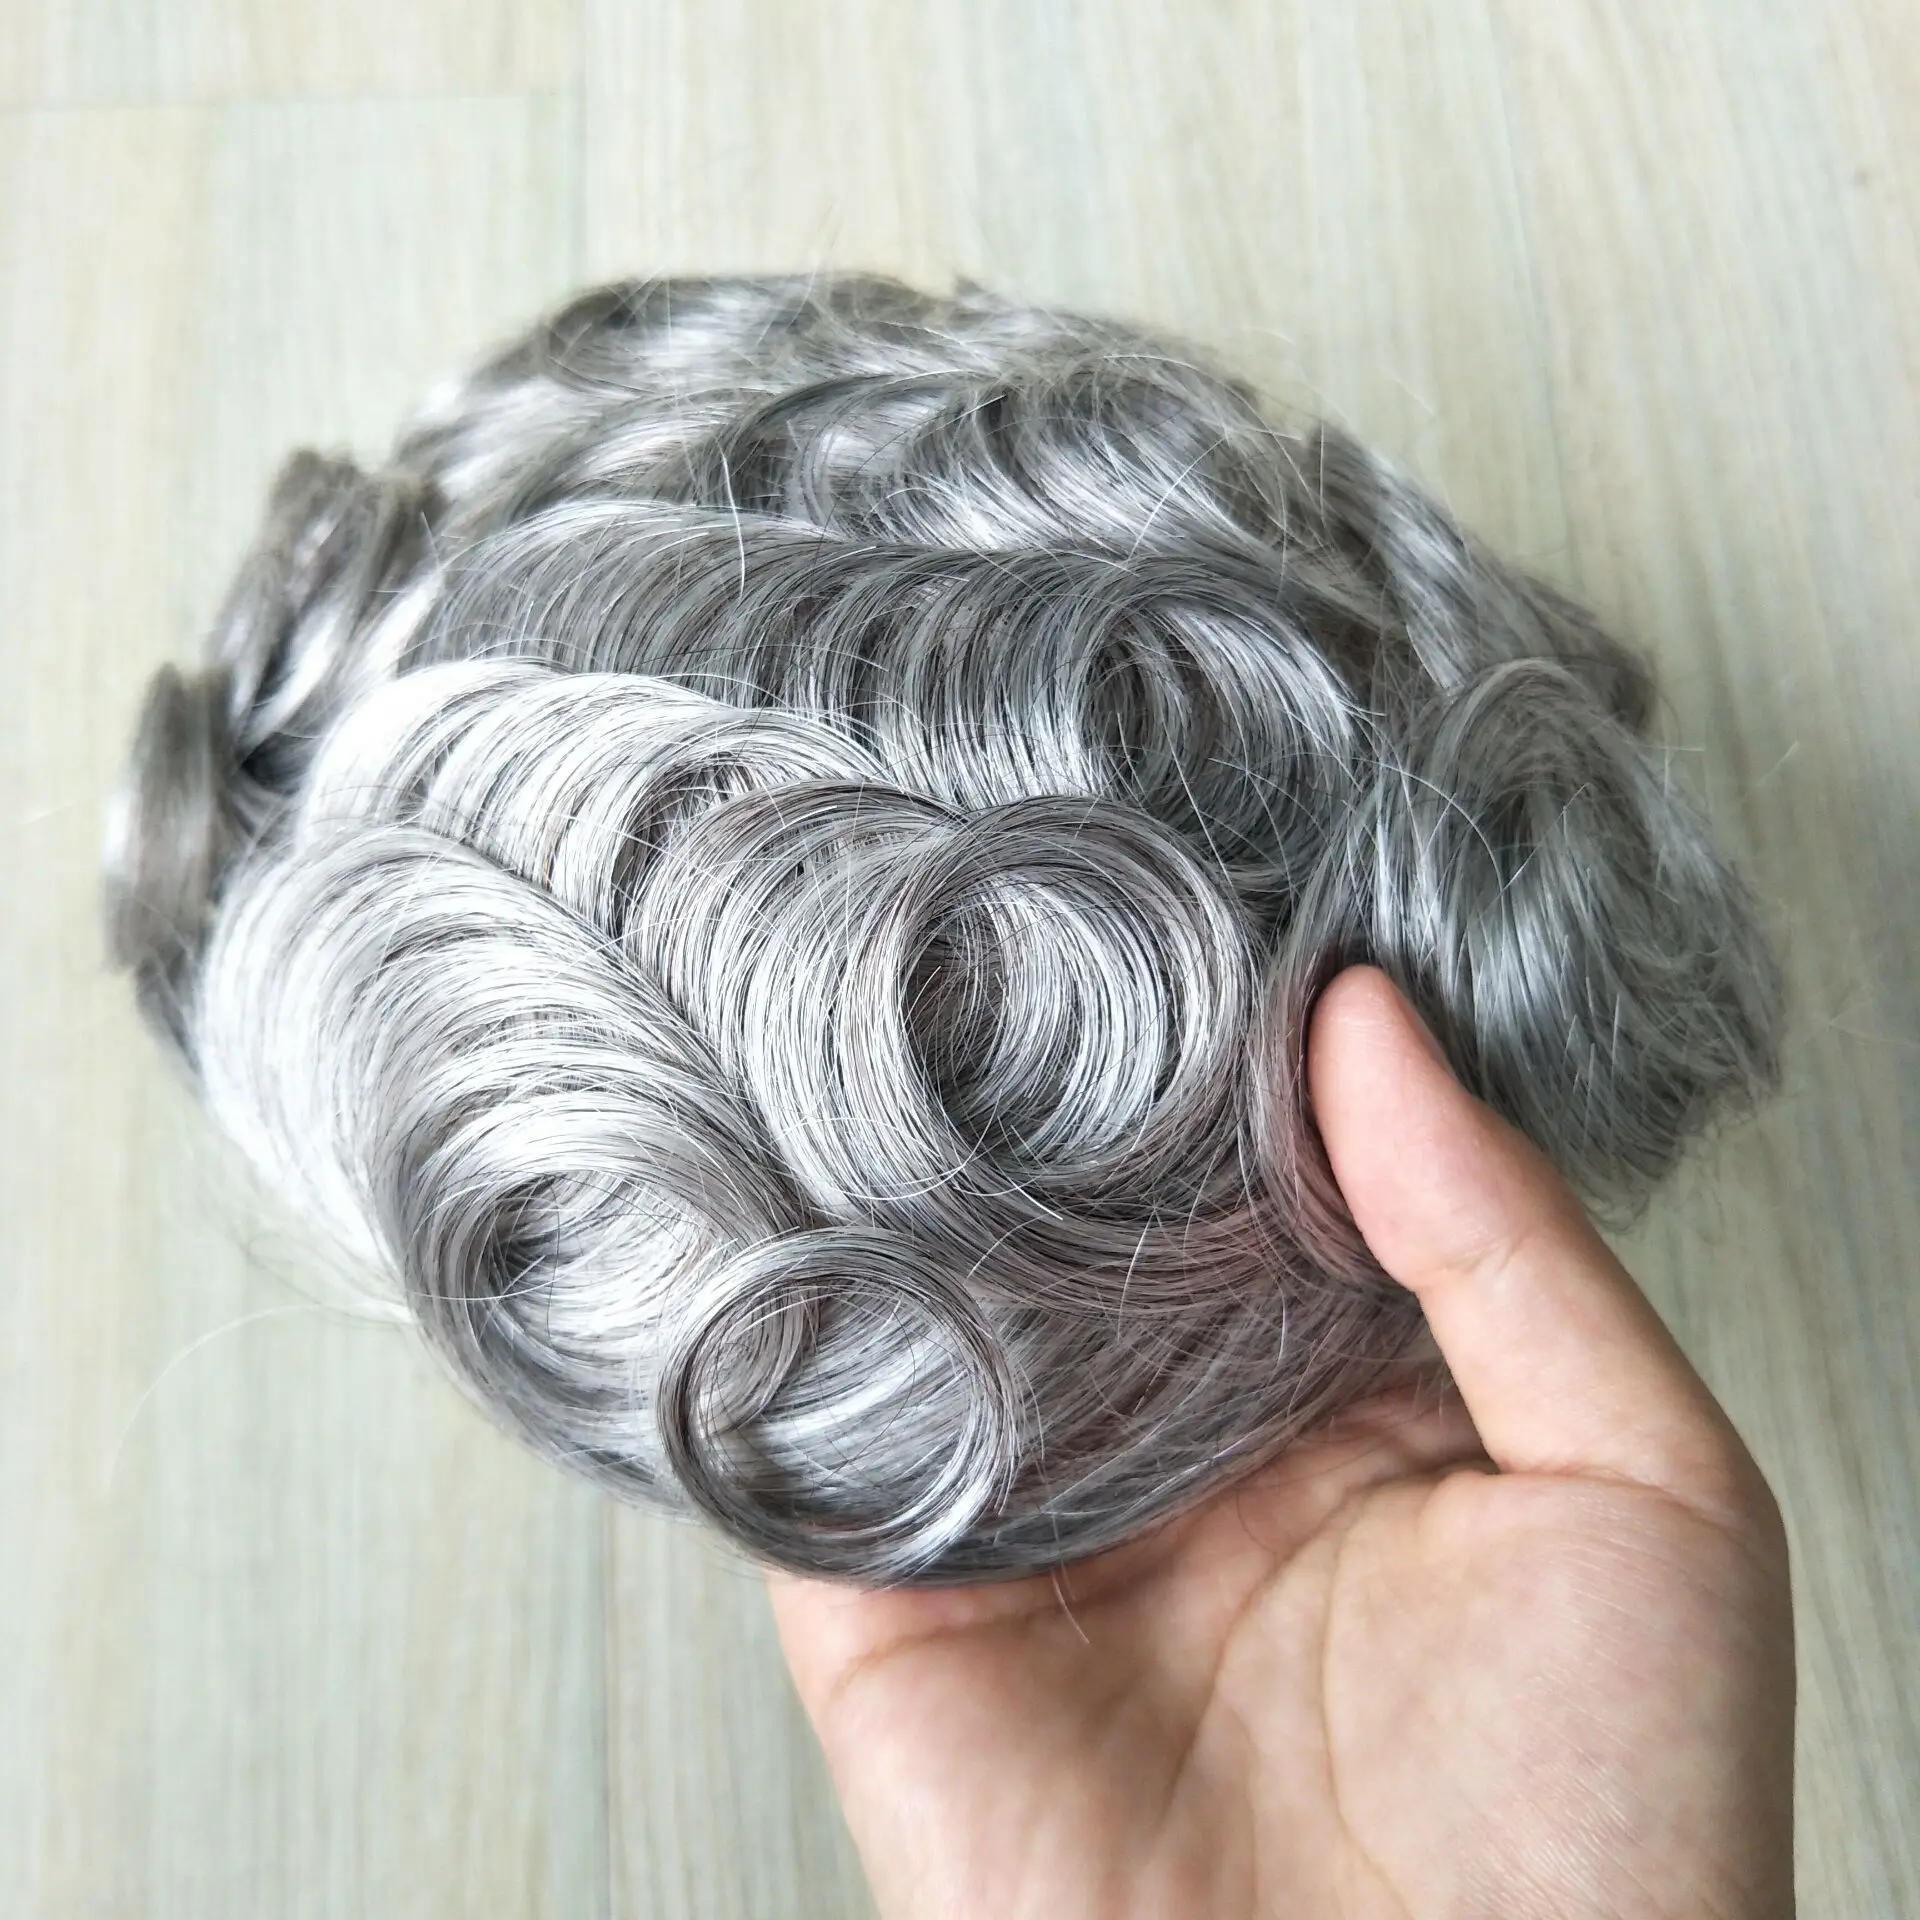 toupee with grey